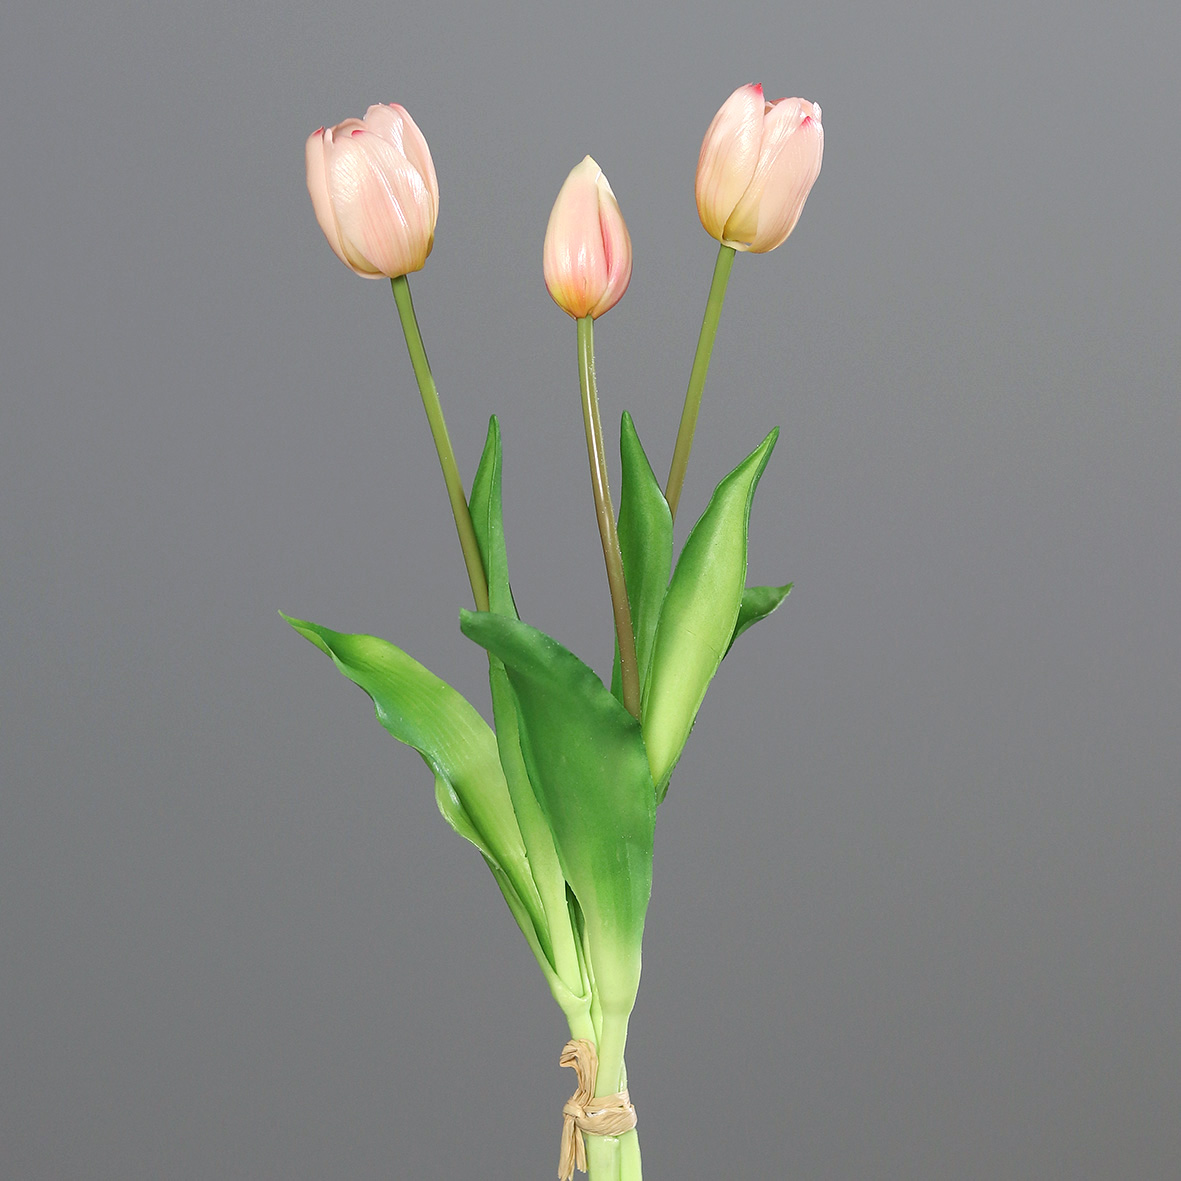 Tulpenstrauß x 3 Kunstblumen rosa (real touch) 39 ca. cm / Pflanzen